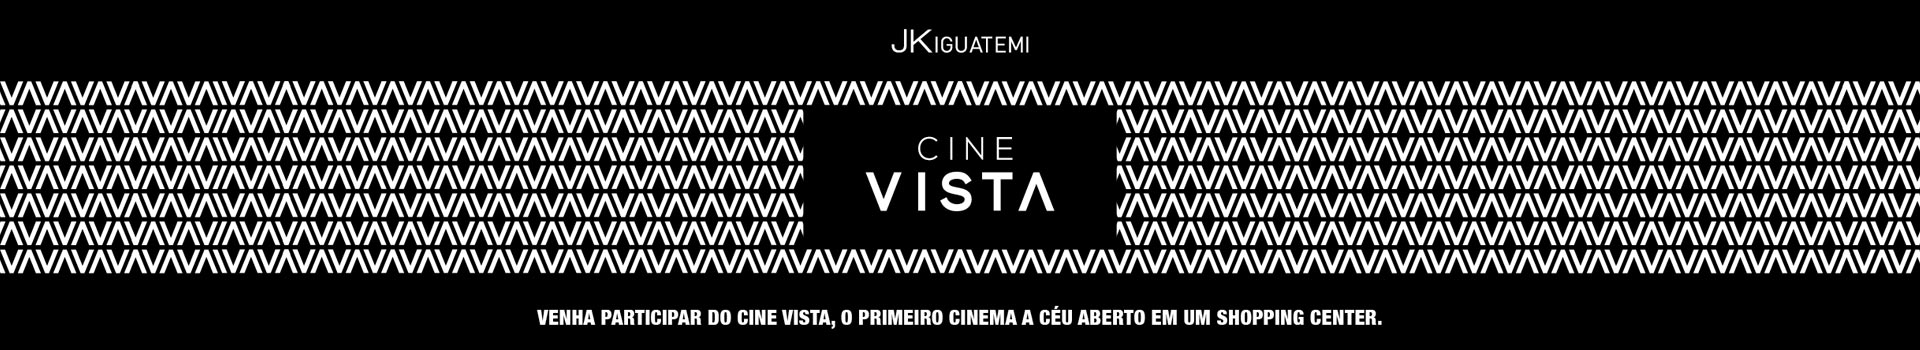 Cine Vista 2019